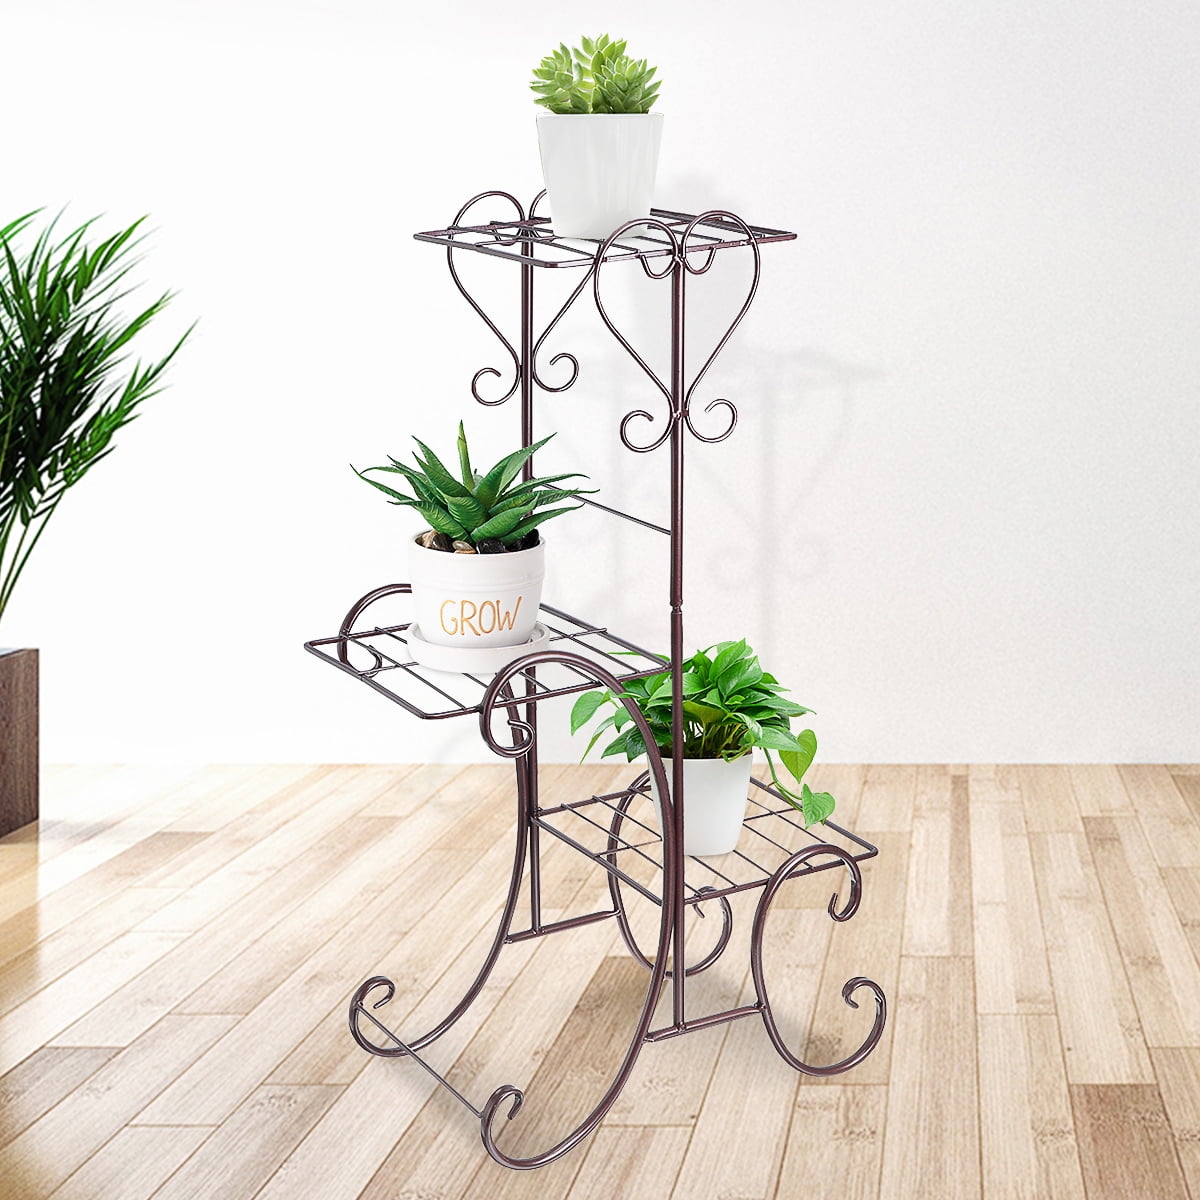 Details about   Metal Plant Pot Stand Holder Indoor/Outdoor Garden Decor Flower Planter Display 